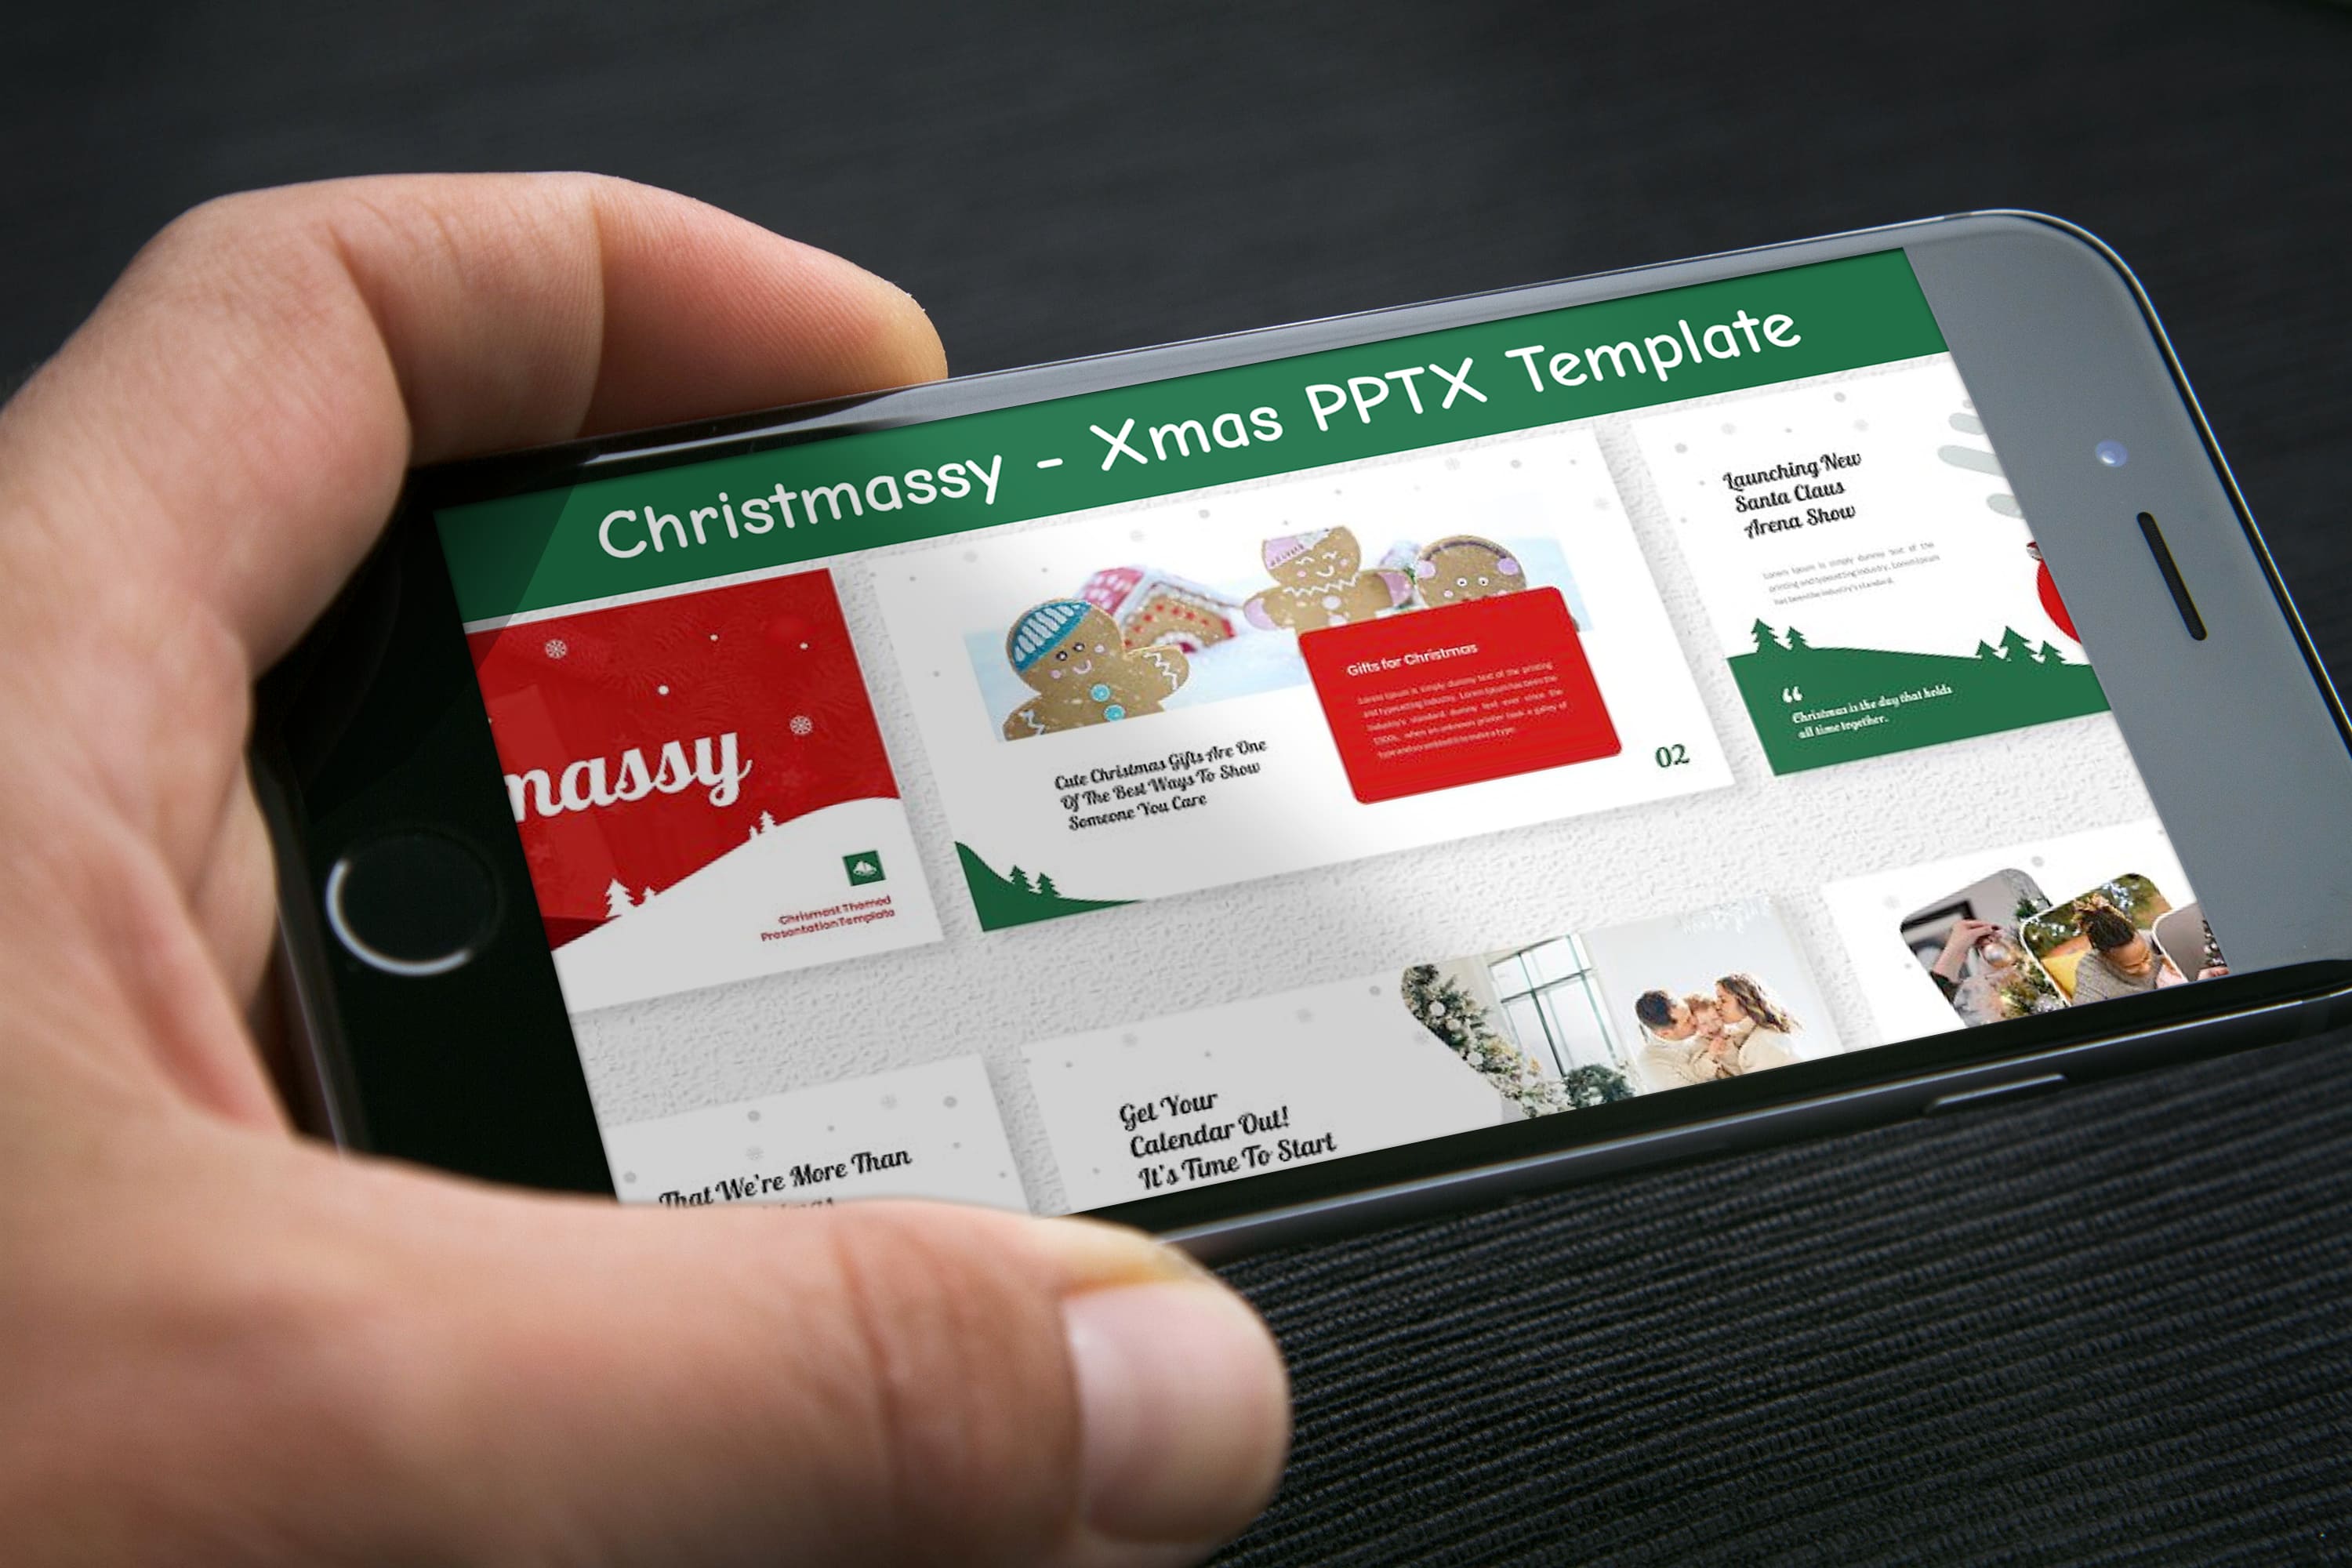 Christmassy - Xmas PPTX Template - Mockup on Smartphone.